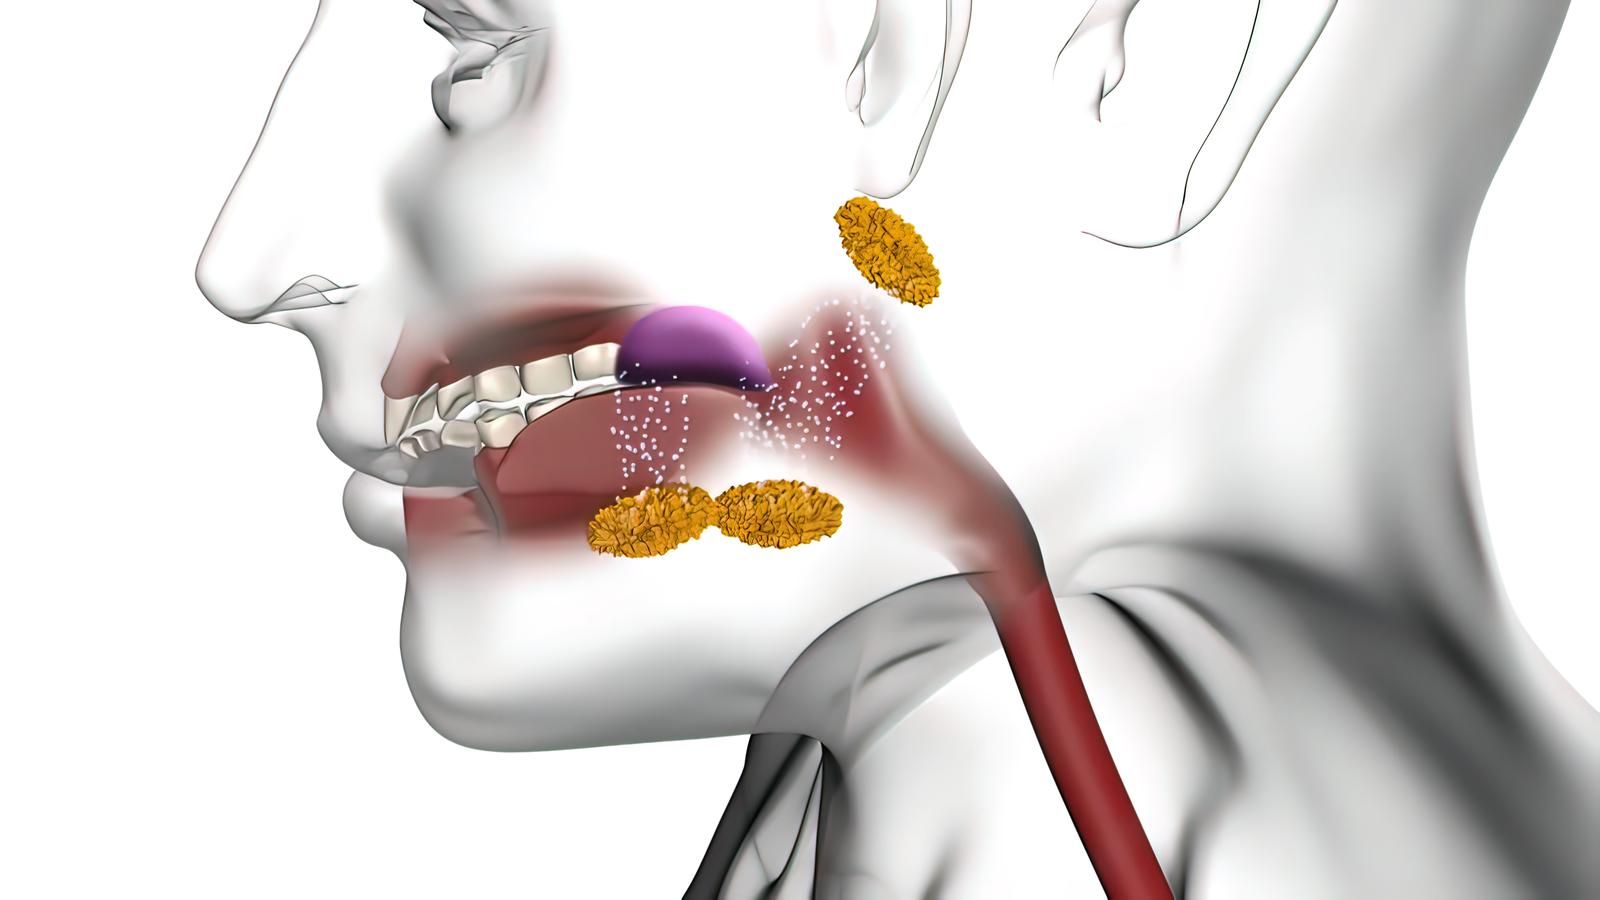 3D illustration of Salivary Glands